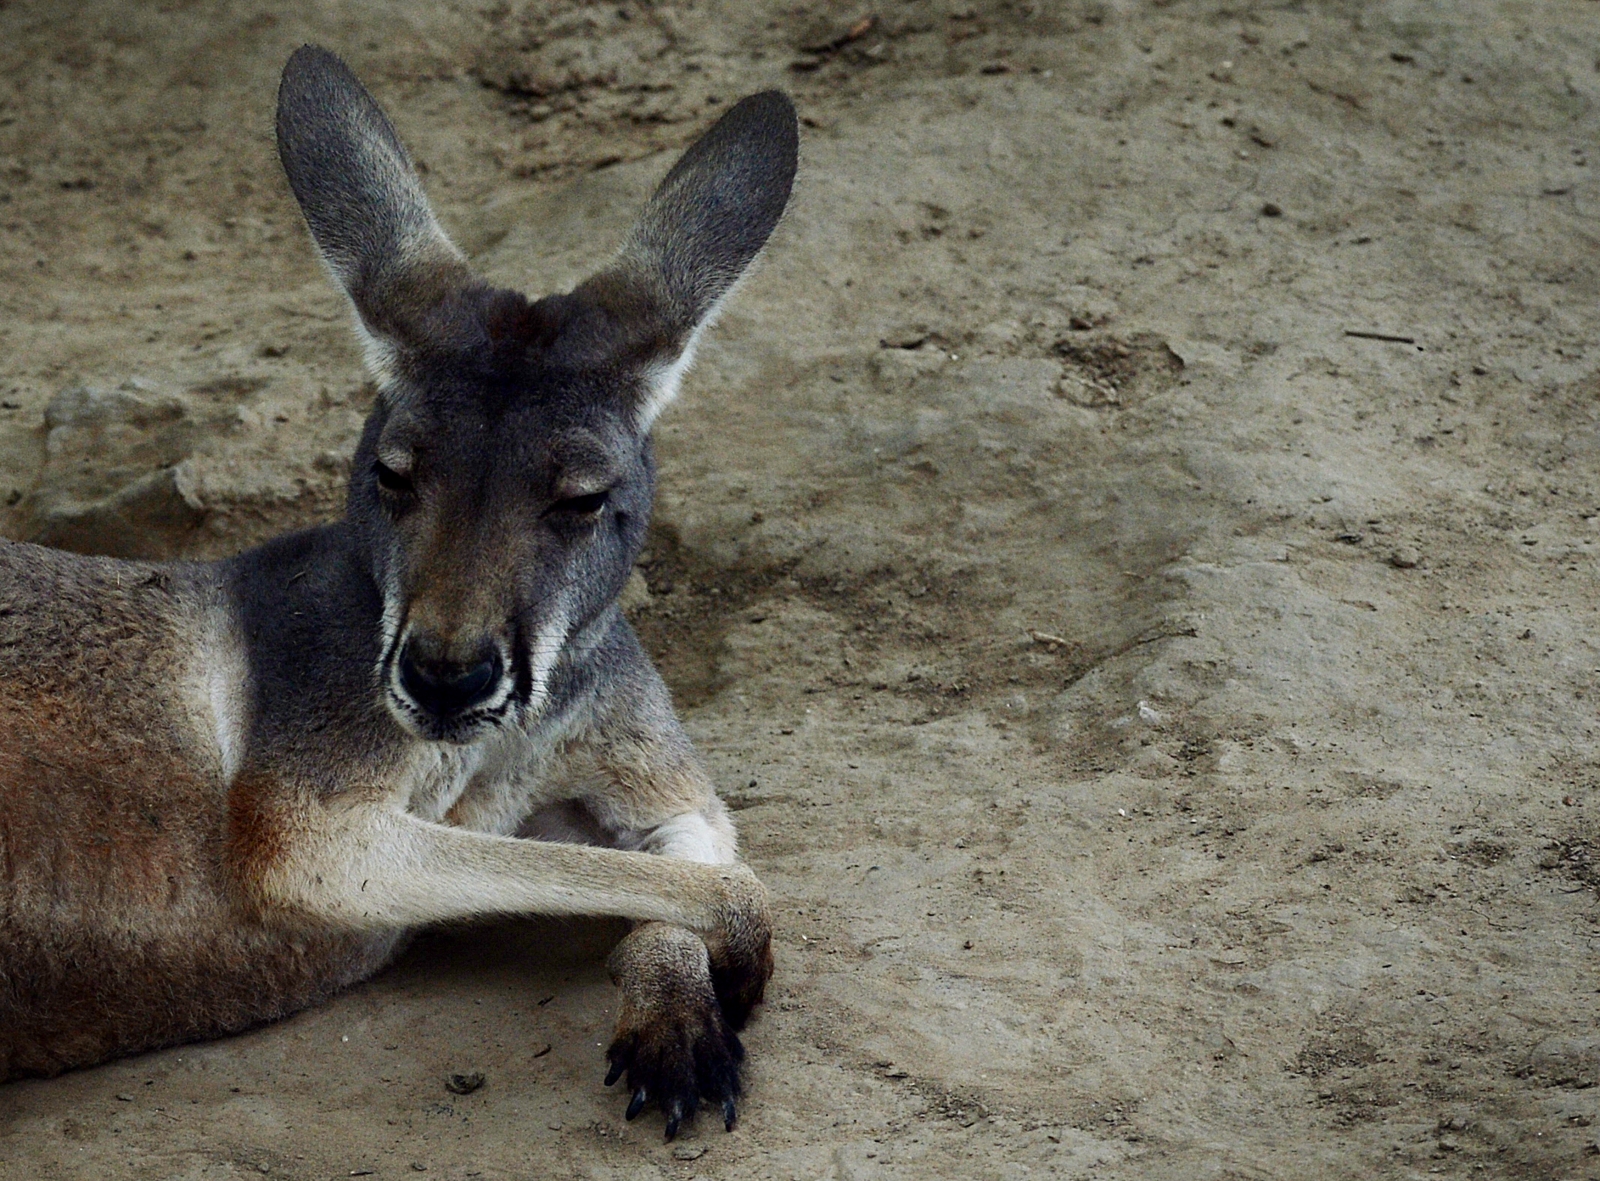 Kangaroo captured mating with pig in northern Australia